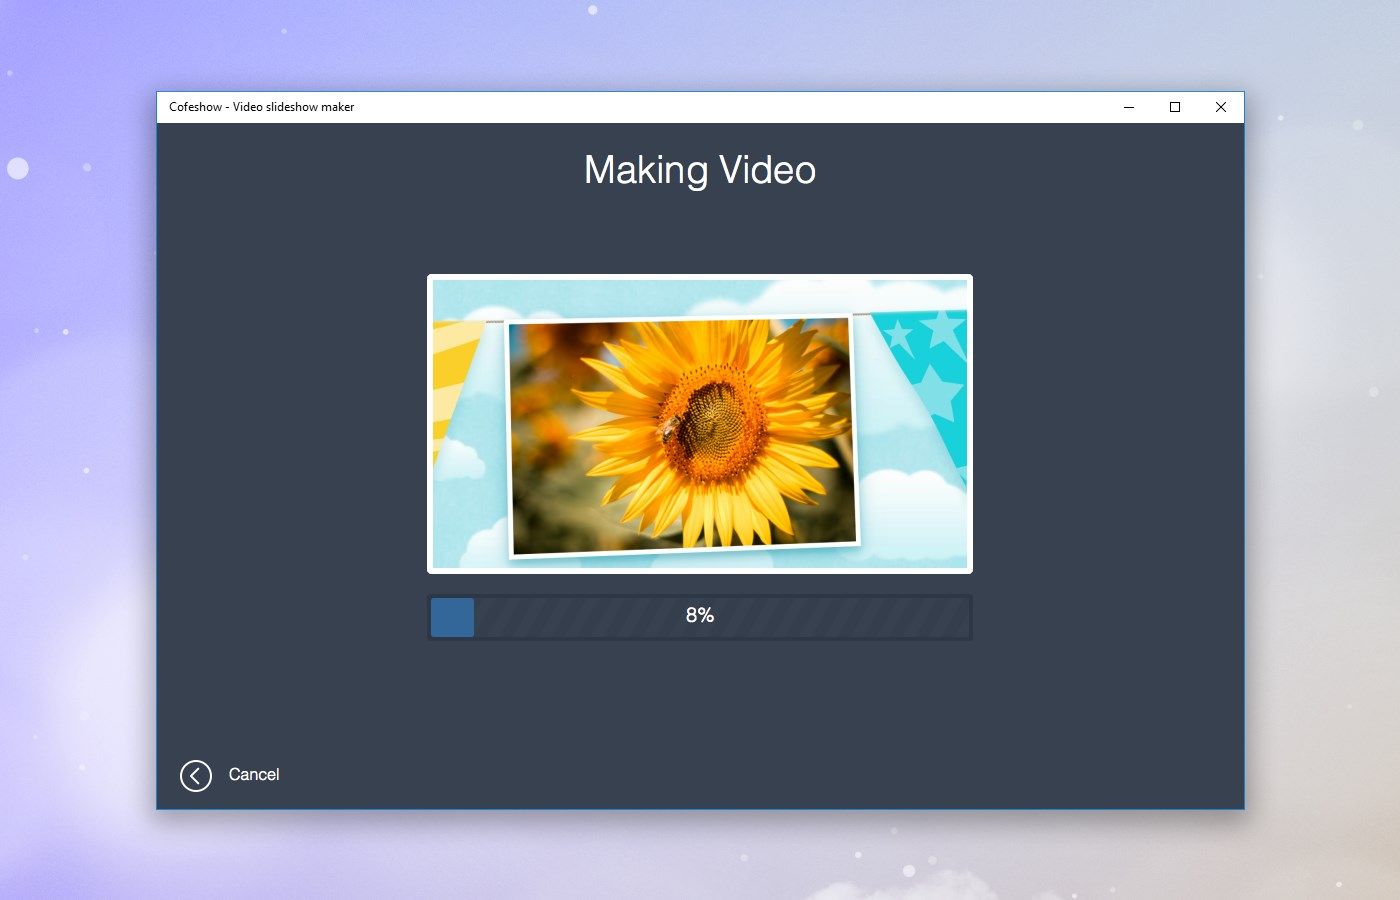 Video slideshow maker - Cofeshow